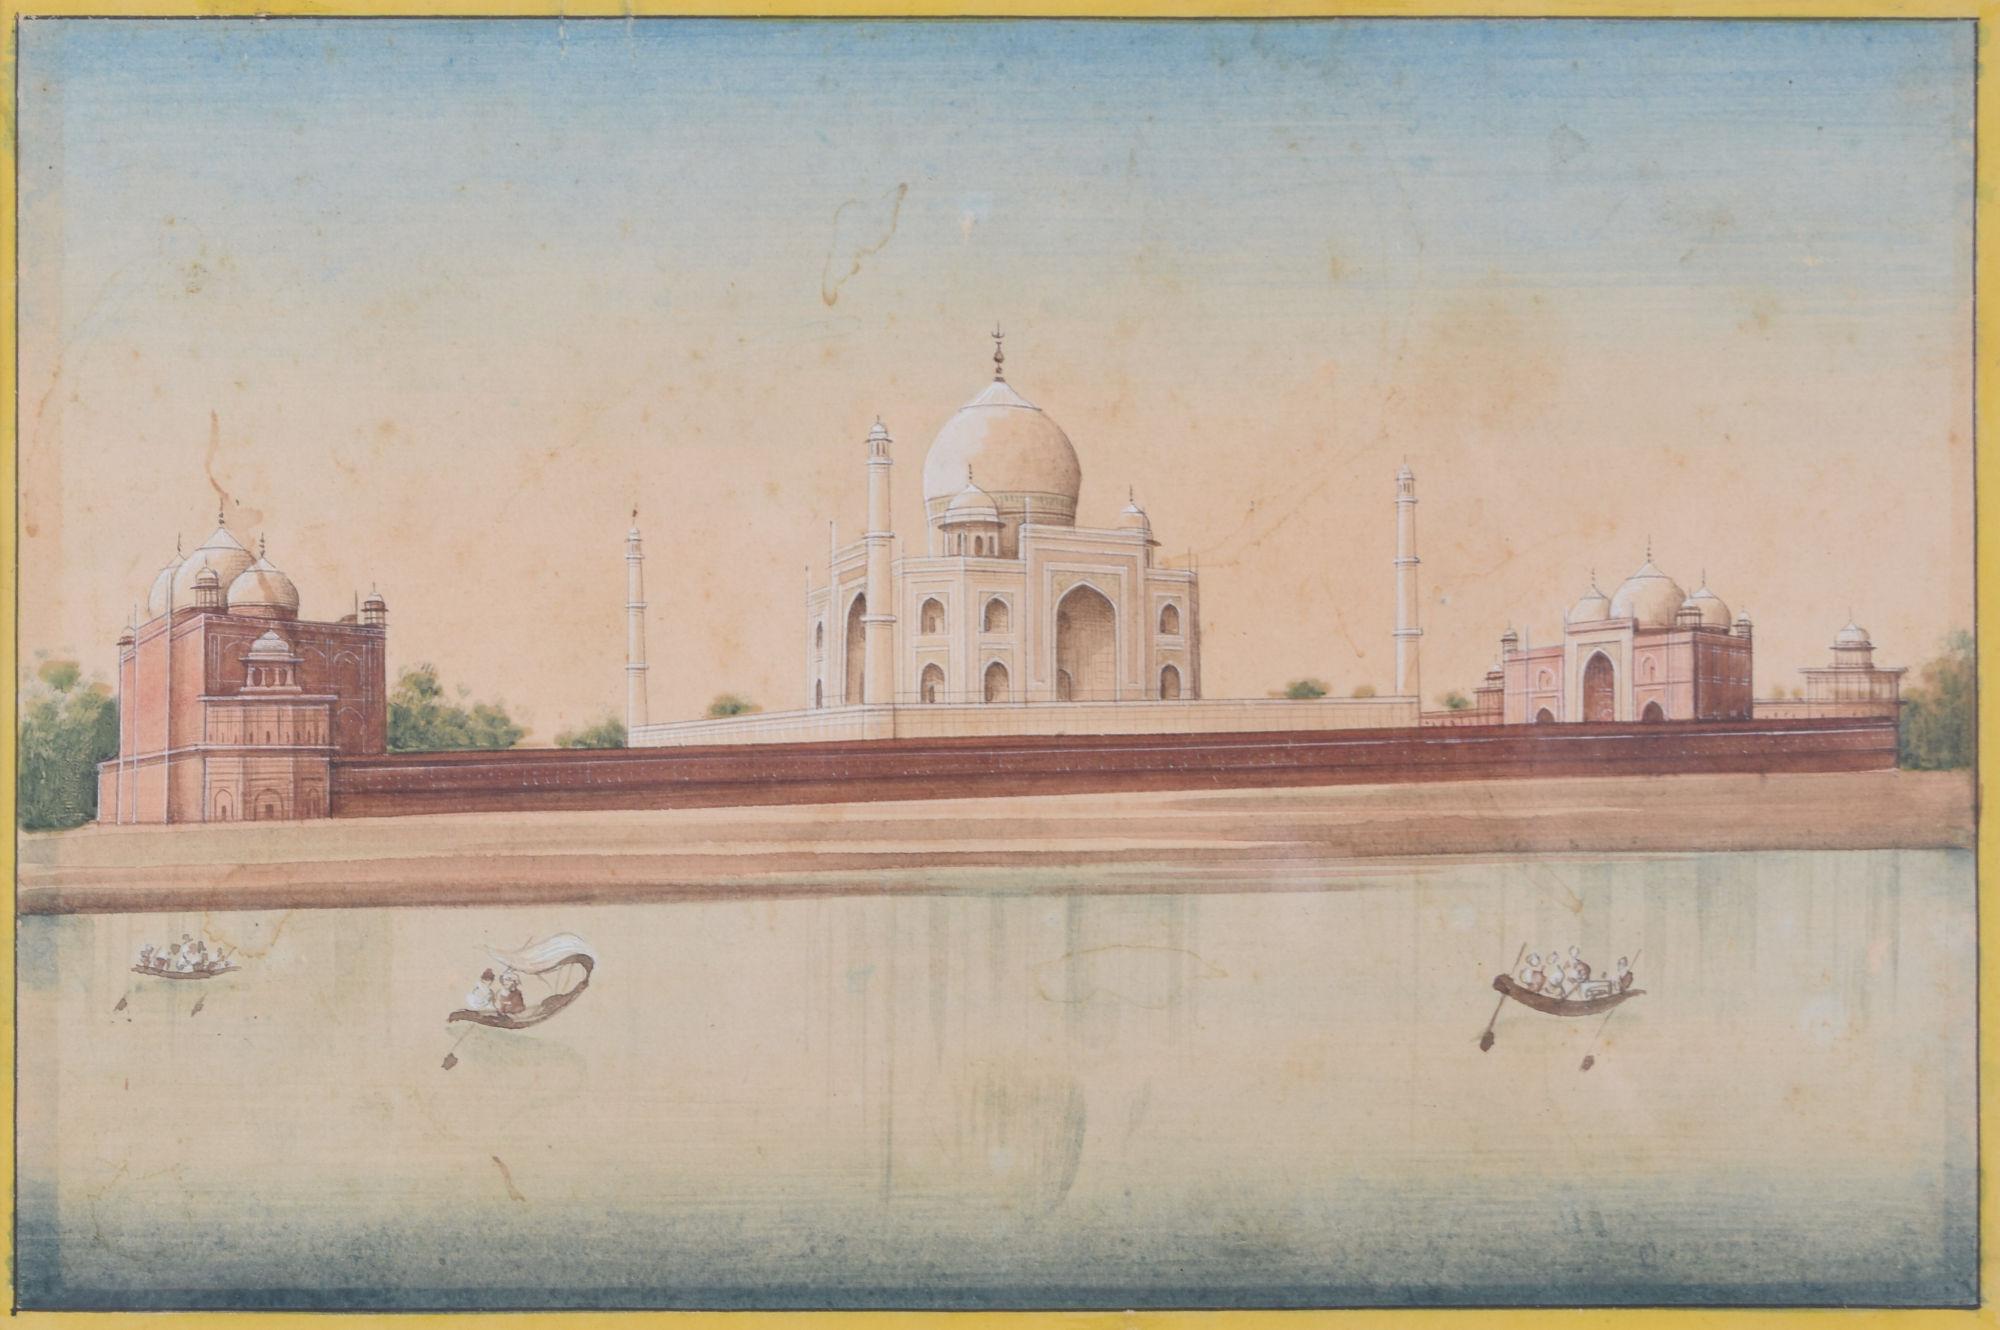 Unknown Landscape Art - Taj Mahal, India watercolour